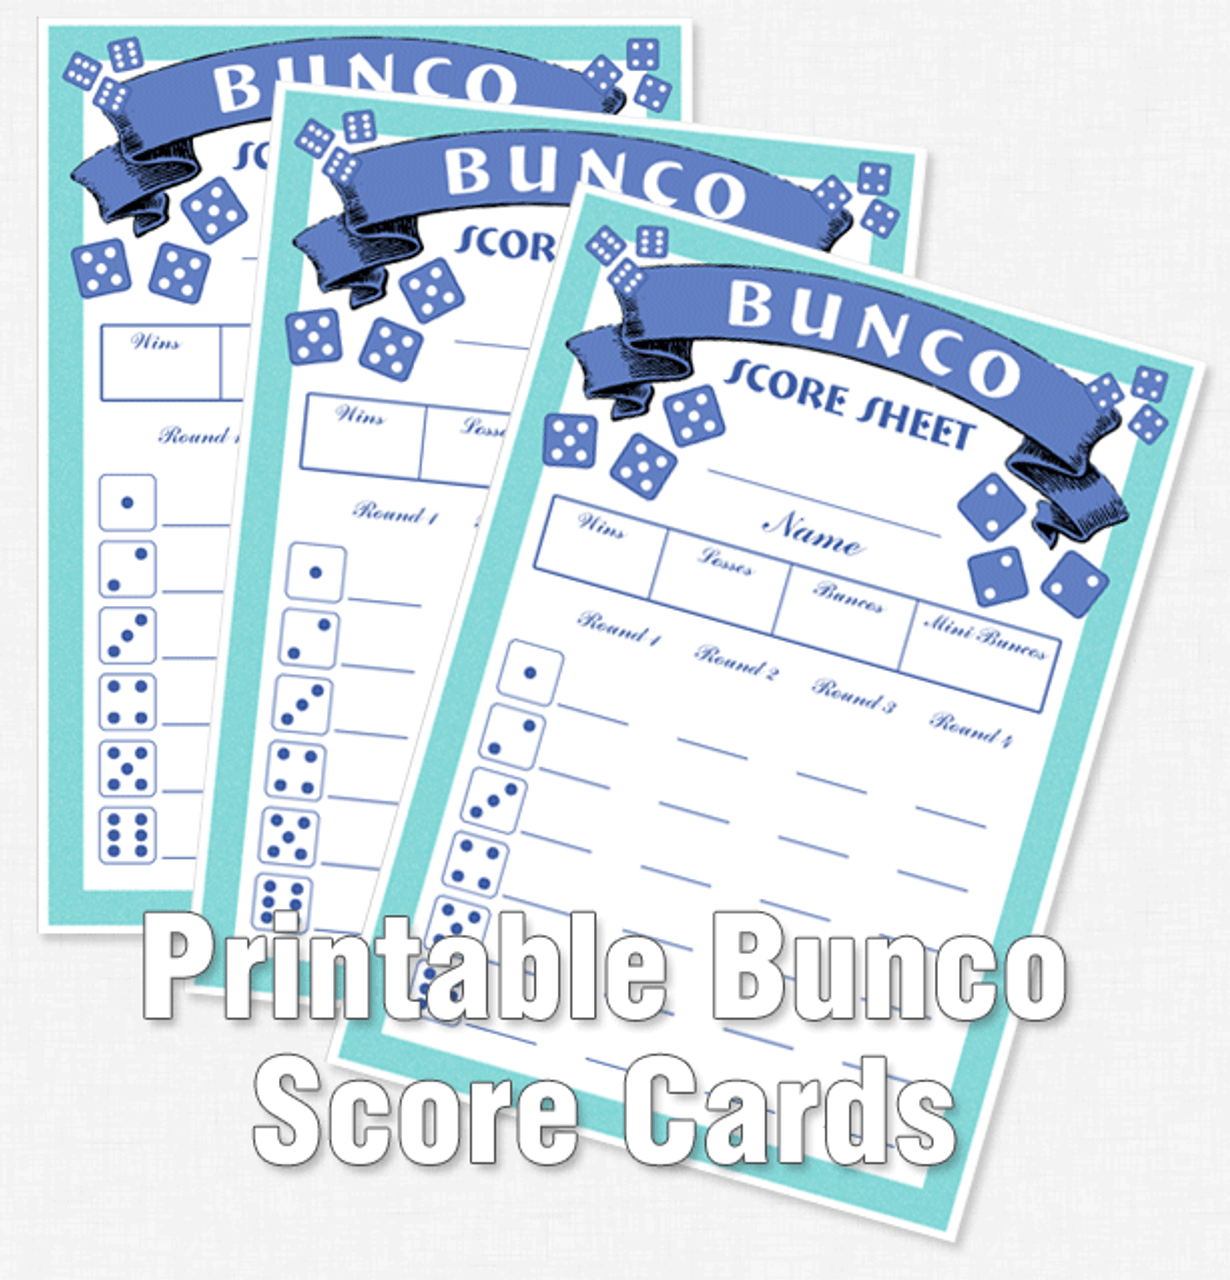 printable-bunco-score-cards-dice-game-depot